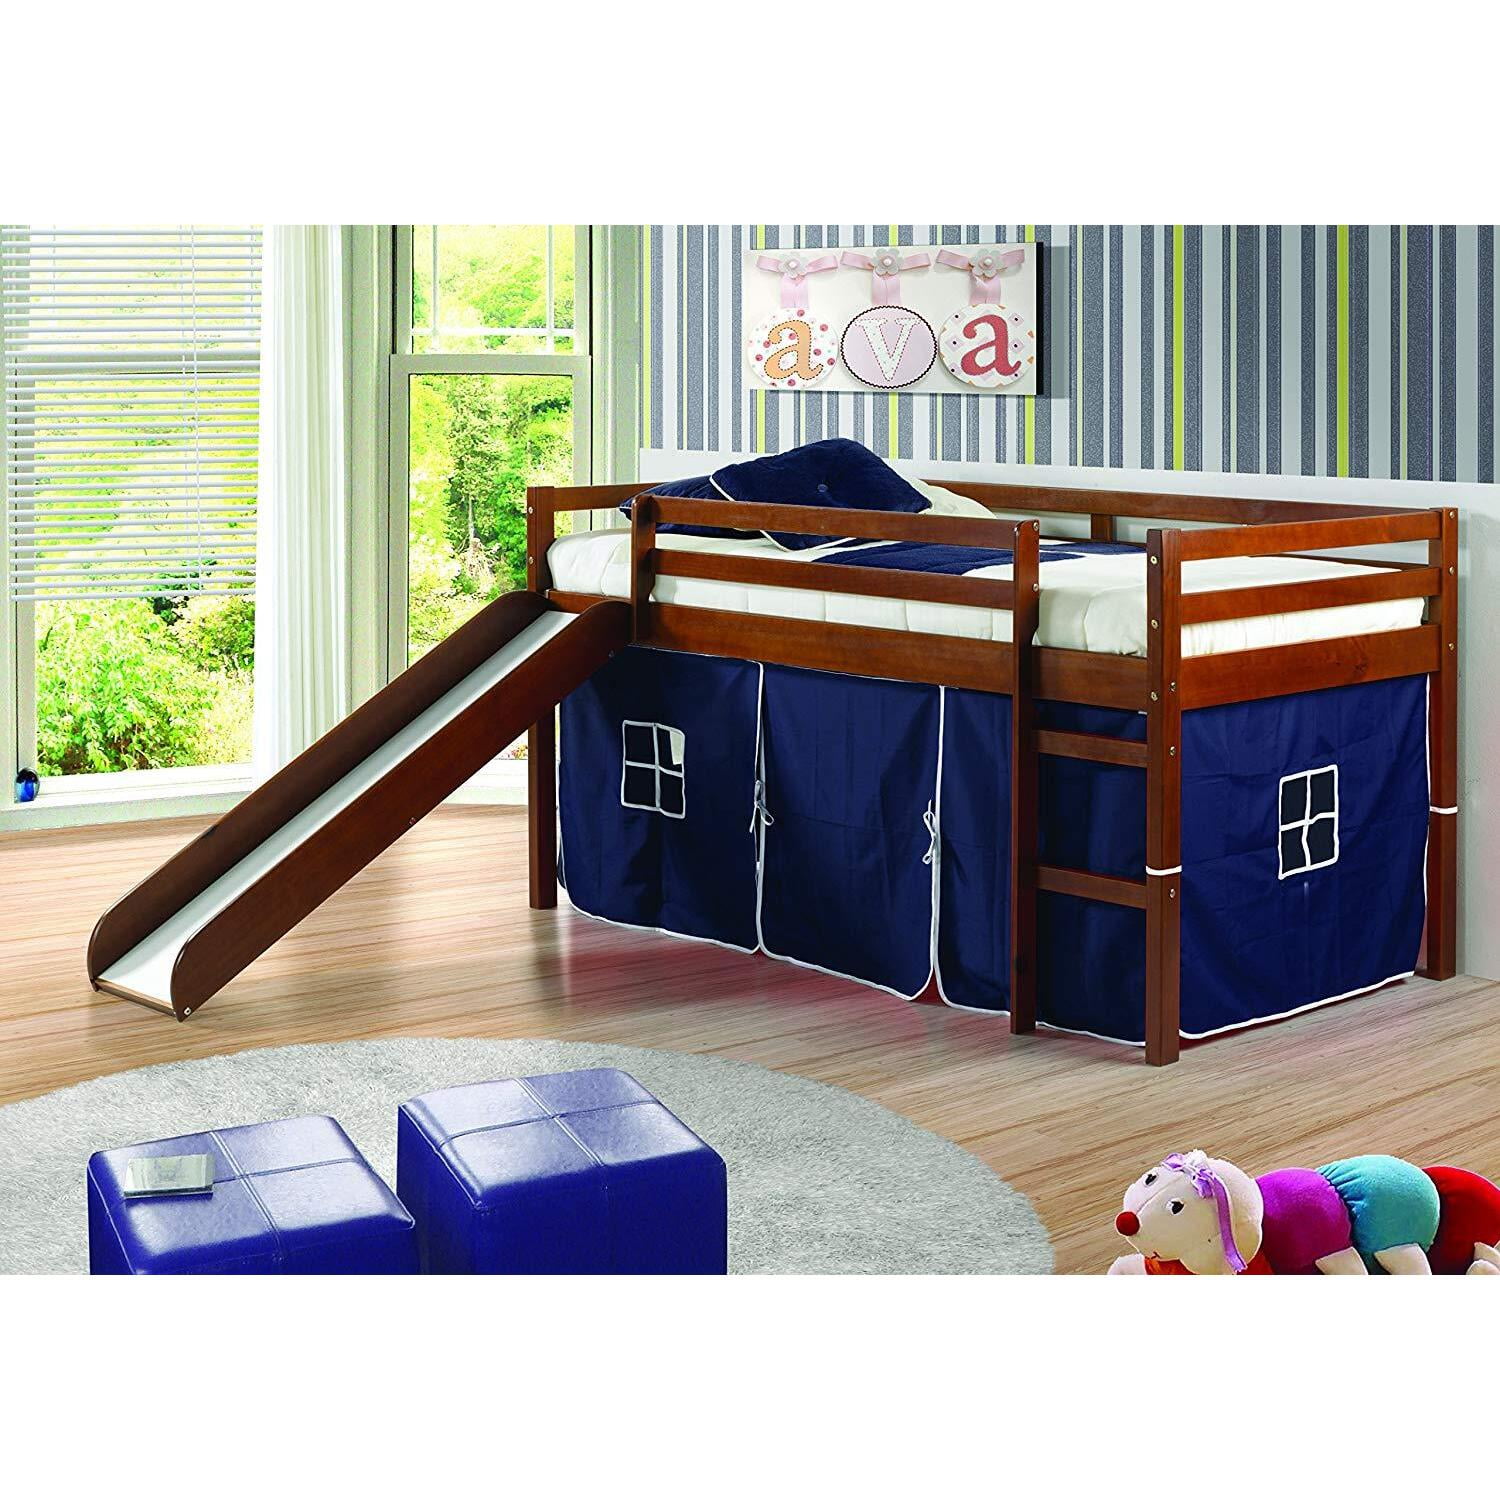 Donco Kids Low Loft Bed With Slide, Star Wars Bunk Bed Tent